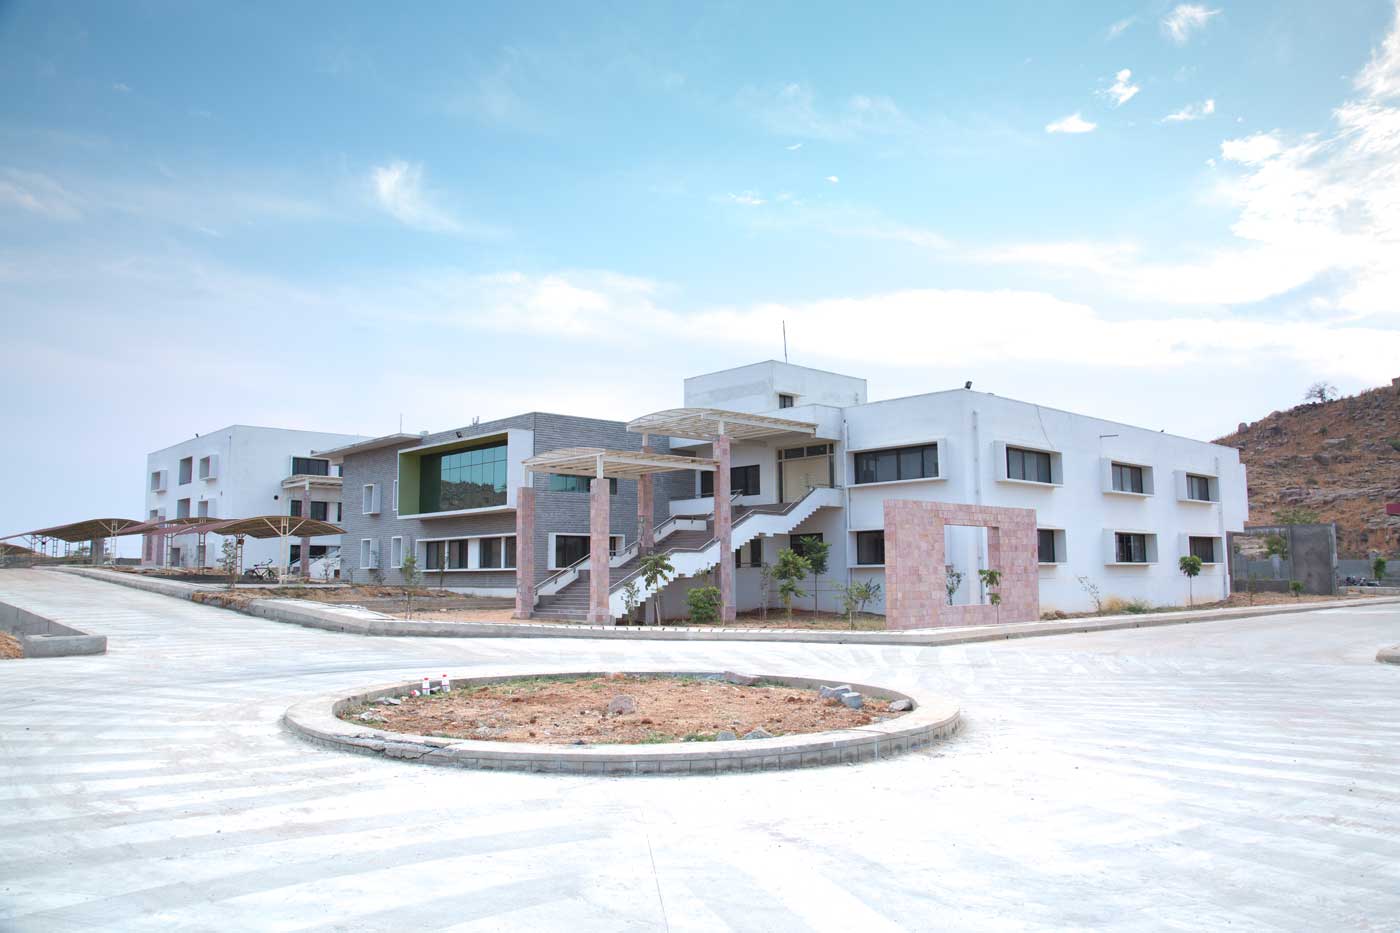 Navodaya Medical College